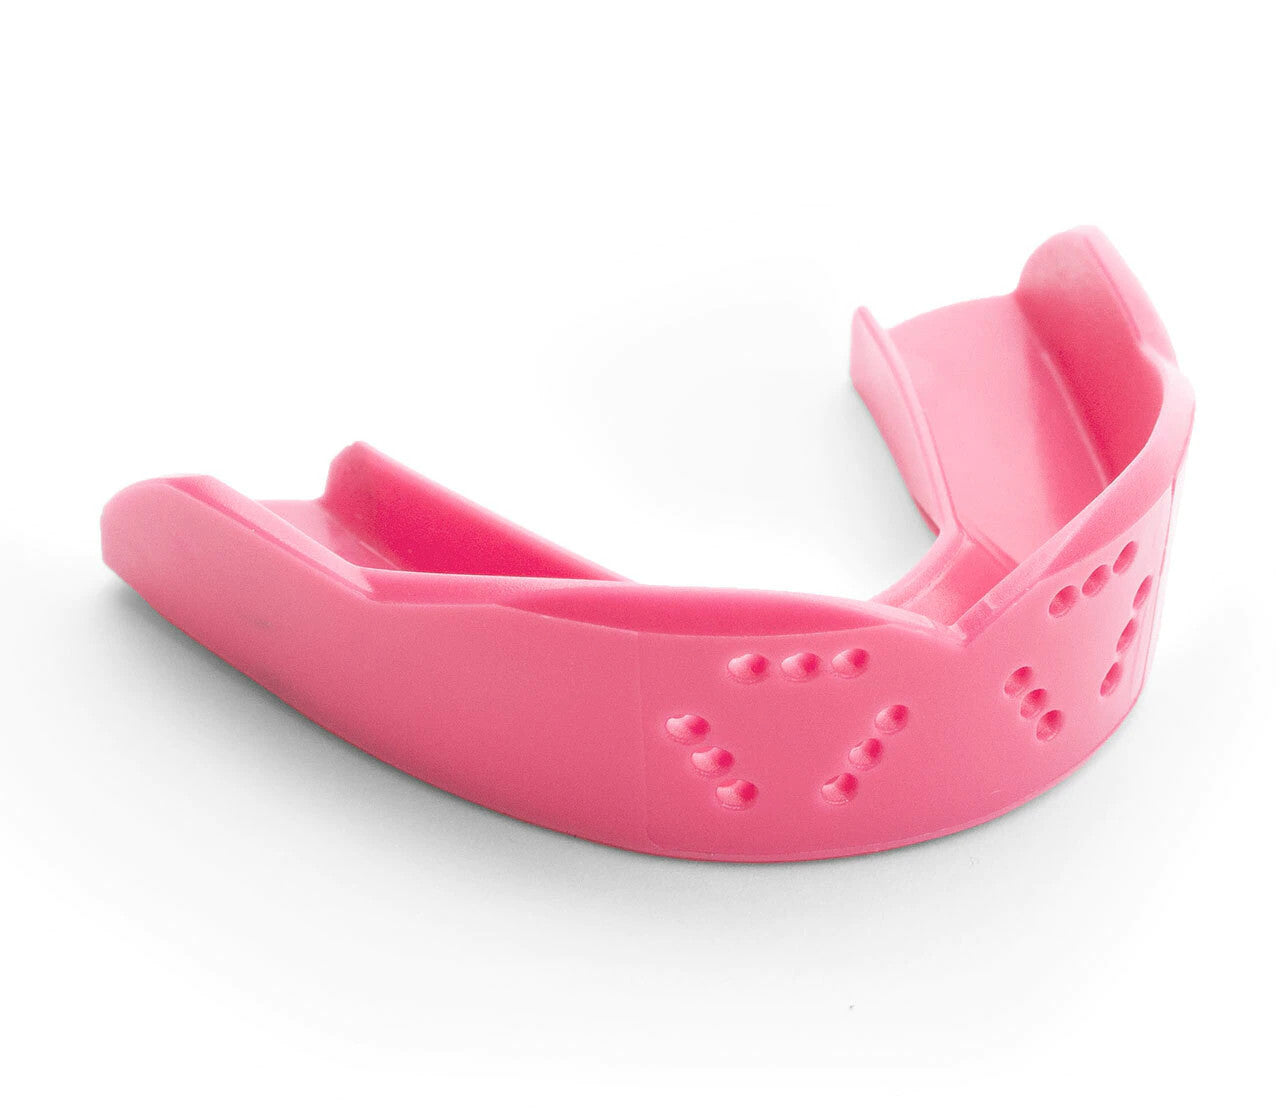 SISU 3D Gum Shield Adult Hot Pink